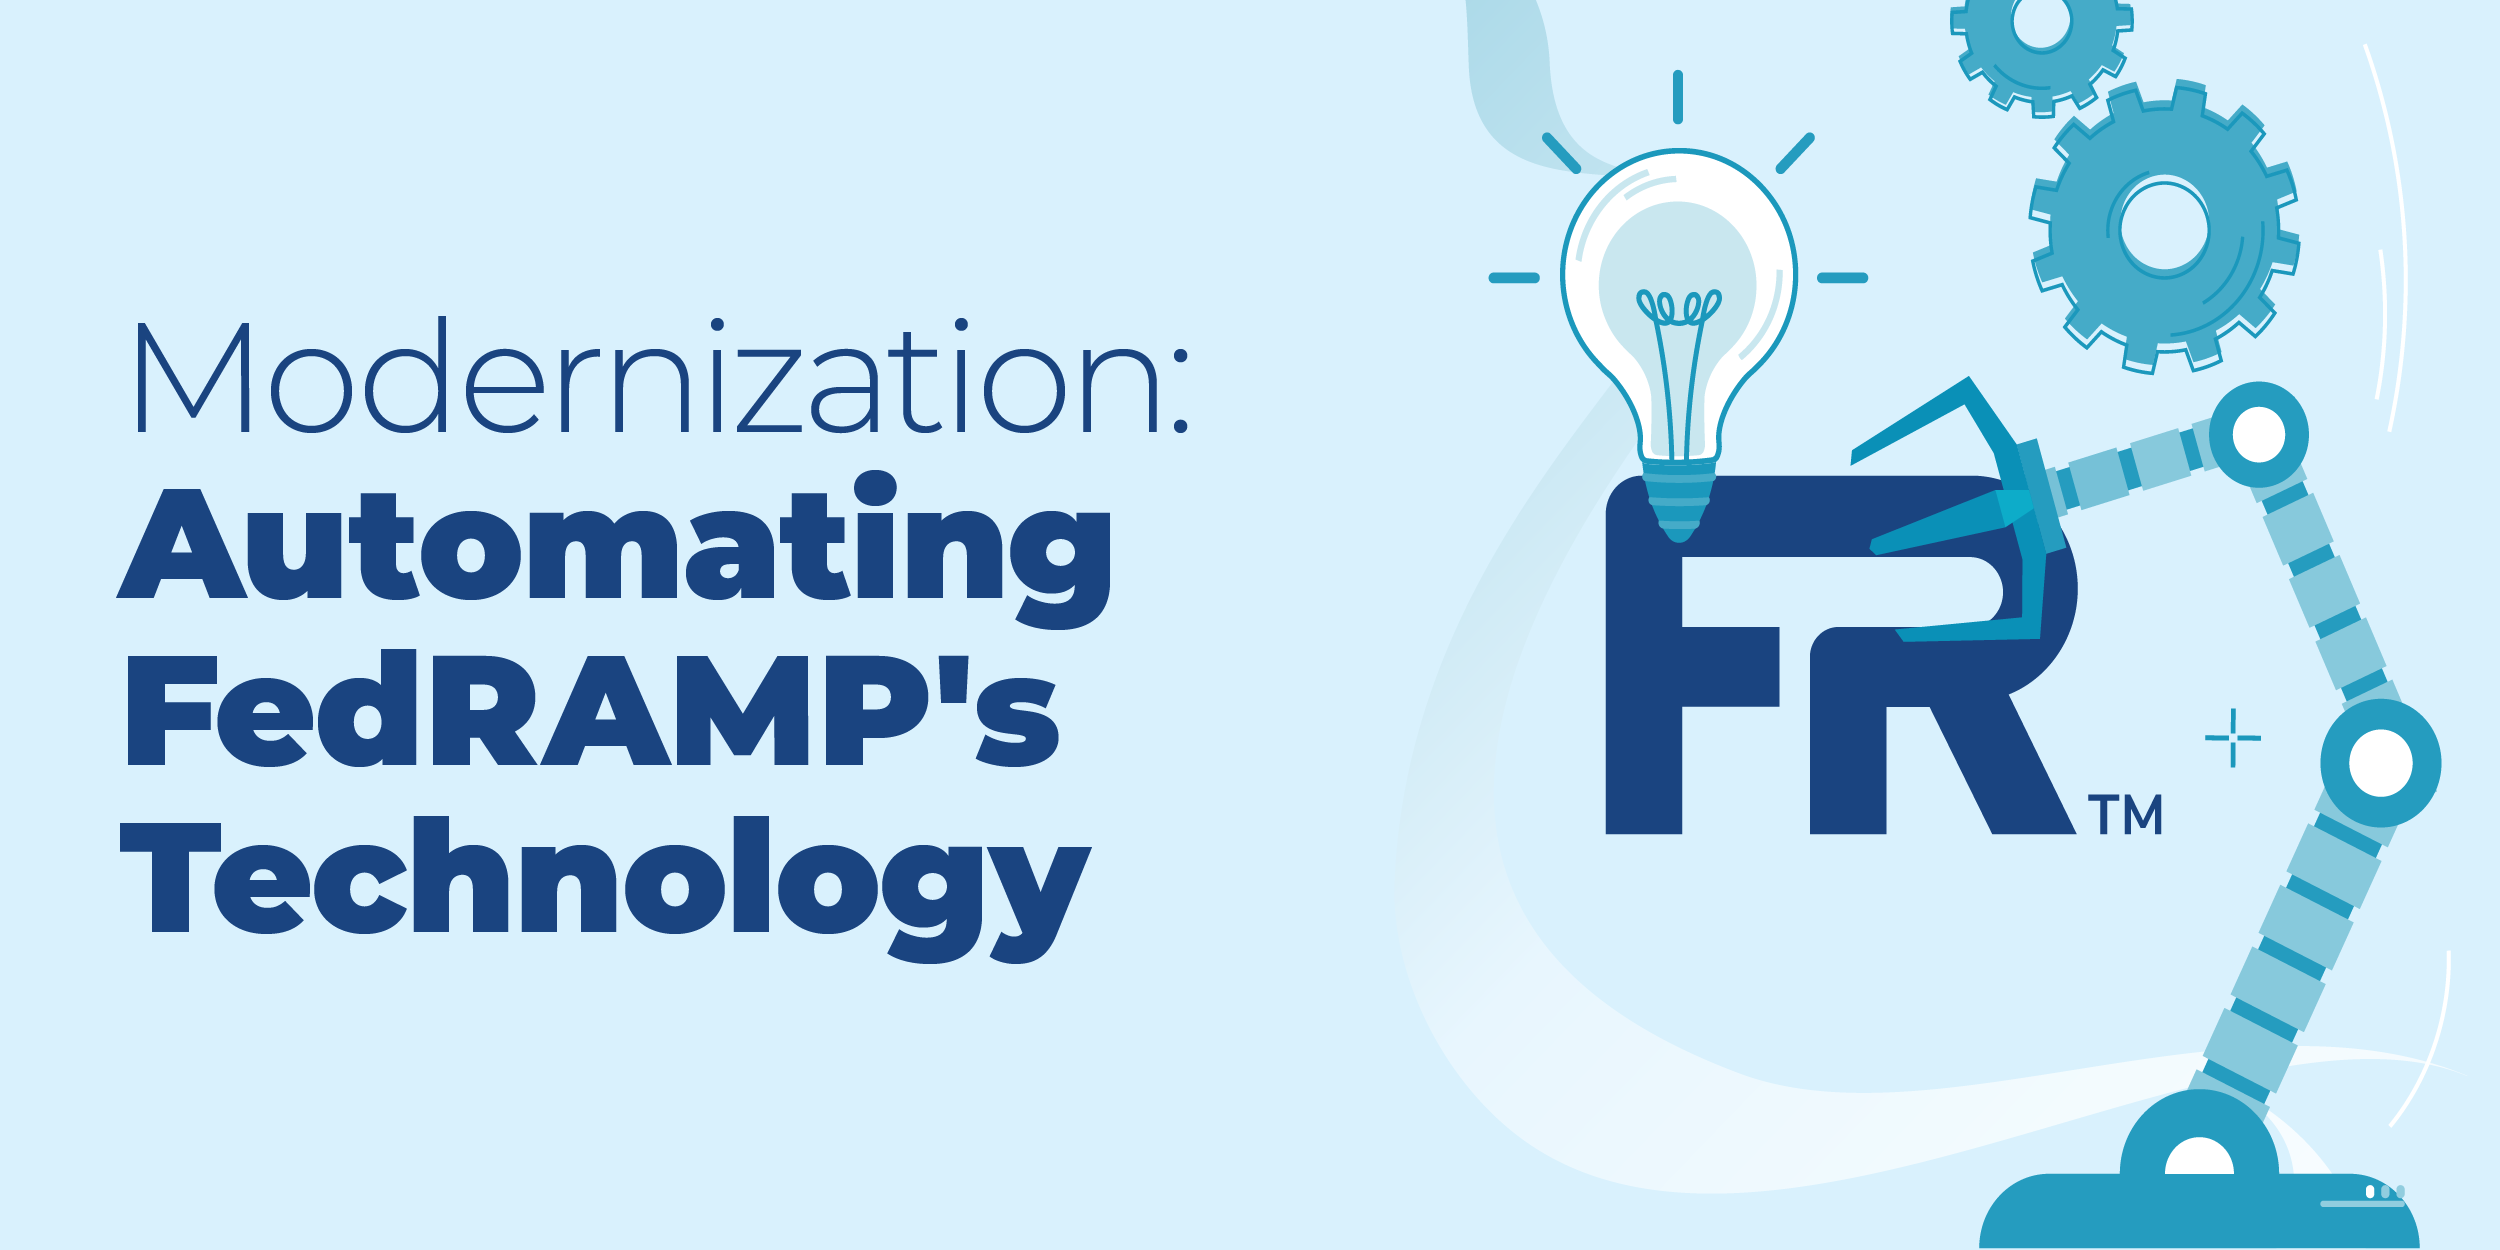 Modernization - Automating FedRAMP's Technology